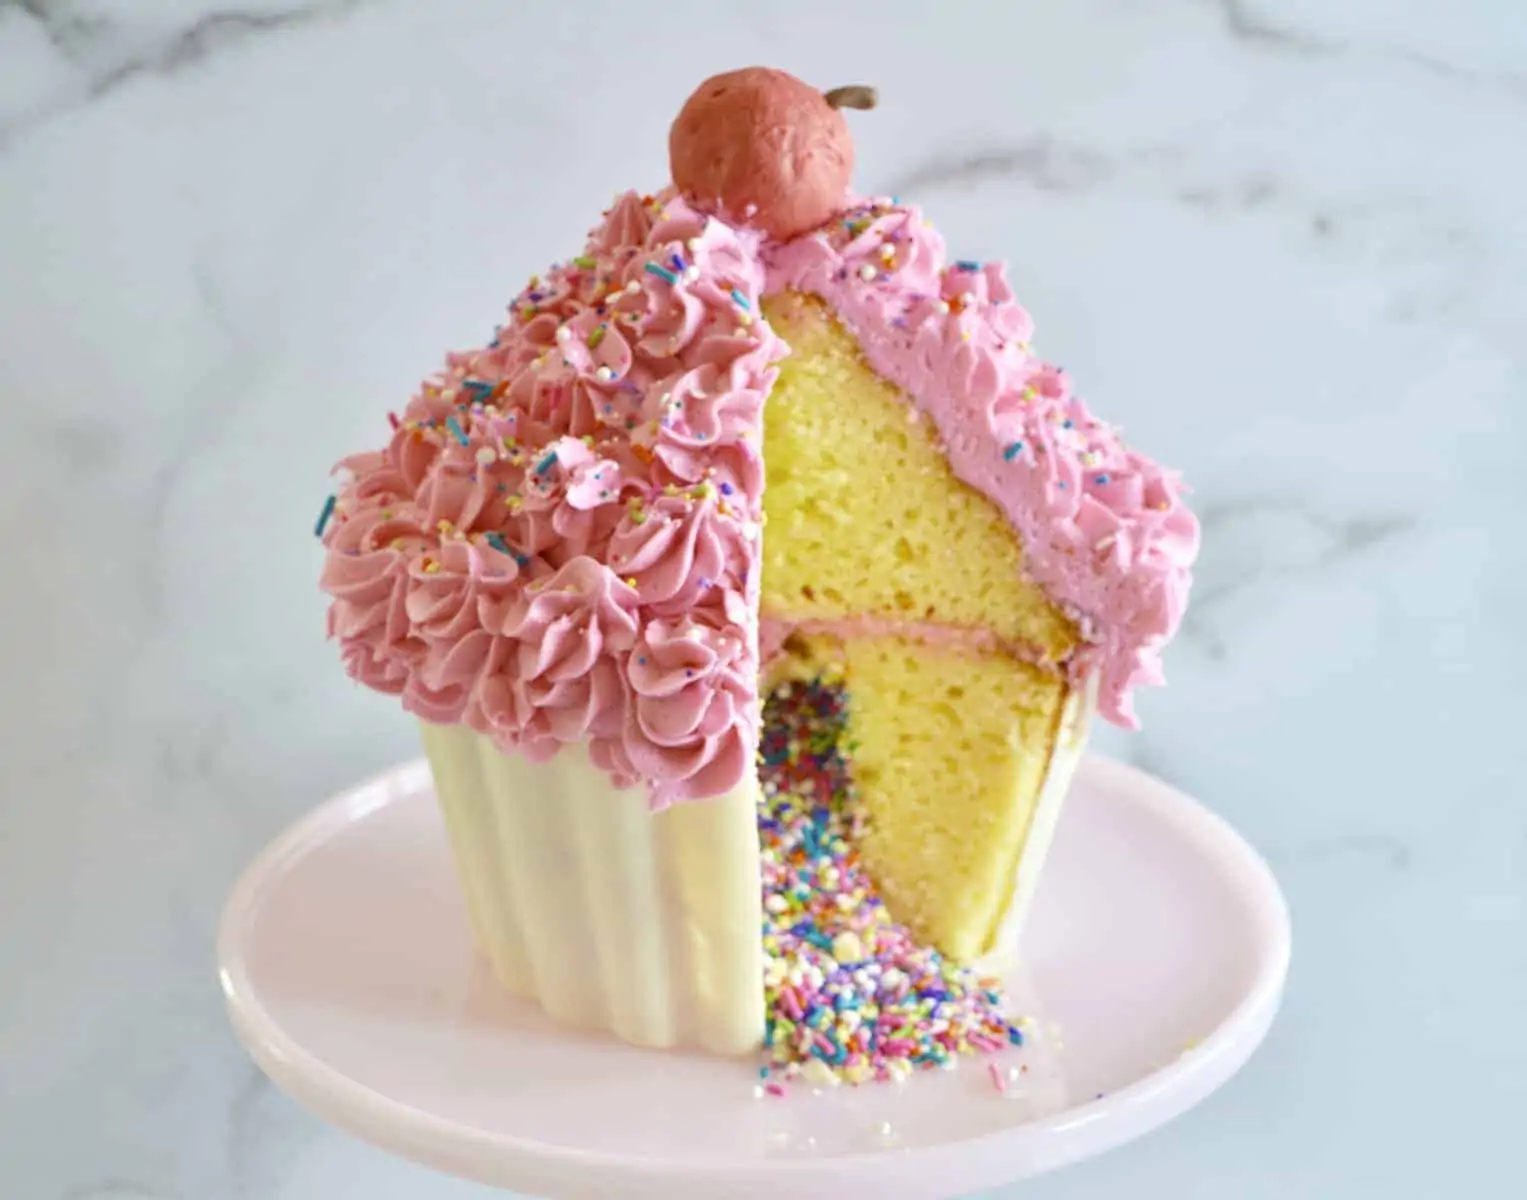 Giant Cupcake